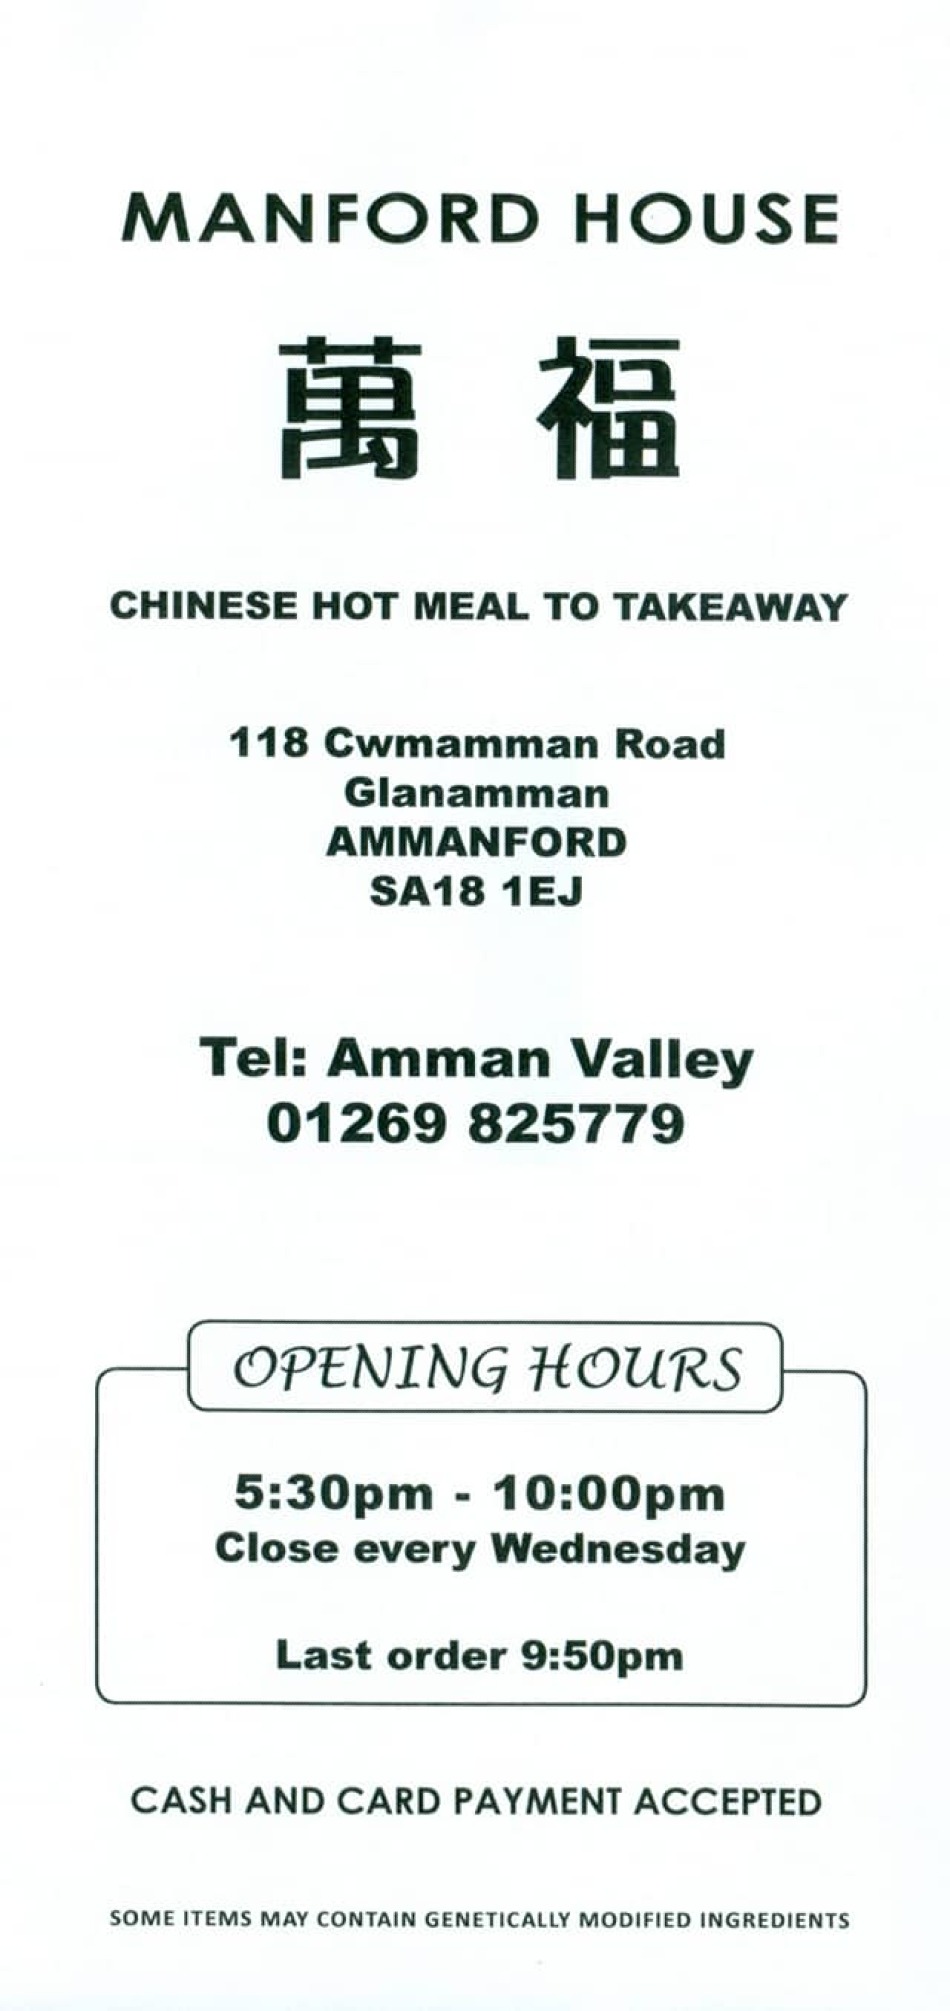 Takeaway Restaurant Menu Page - Manford House Chinese takeaway - Ammanford